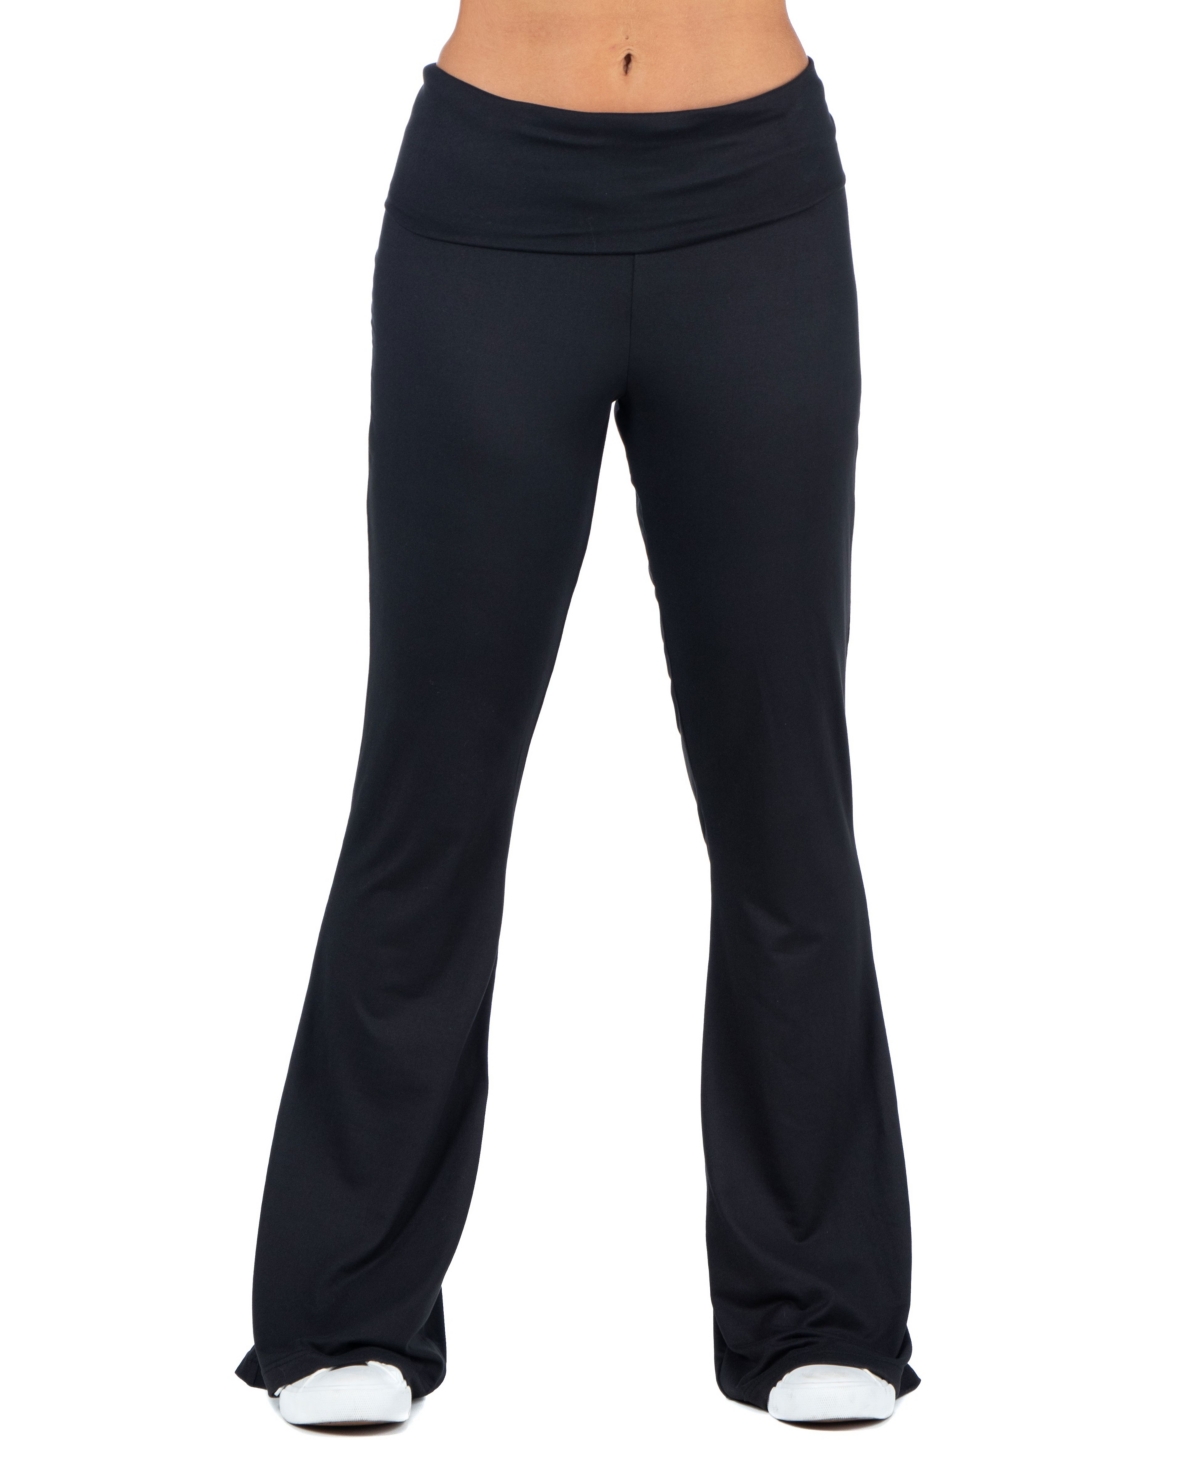 Women's Bell Bottom Foldover Waist Sweatpants - Black